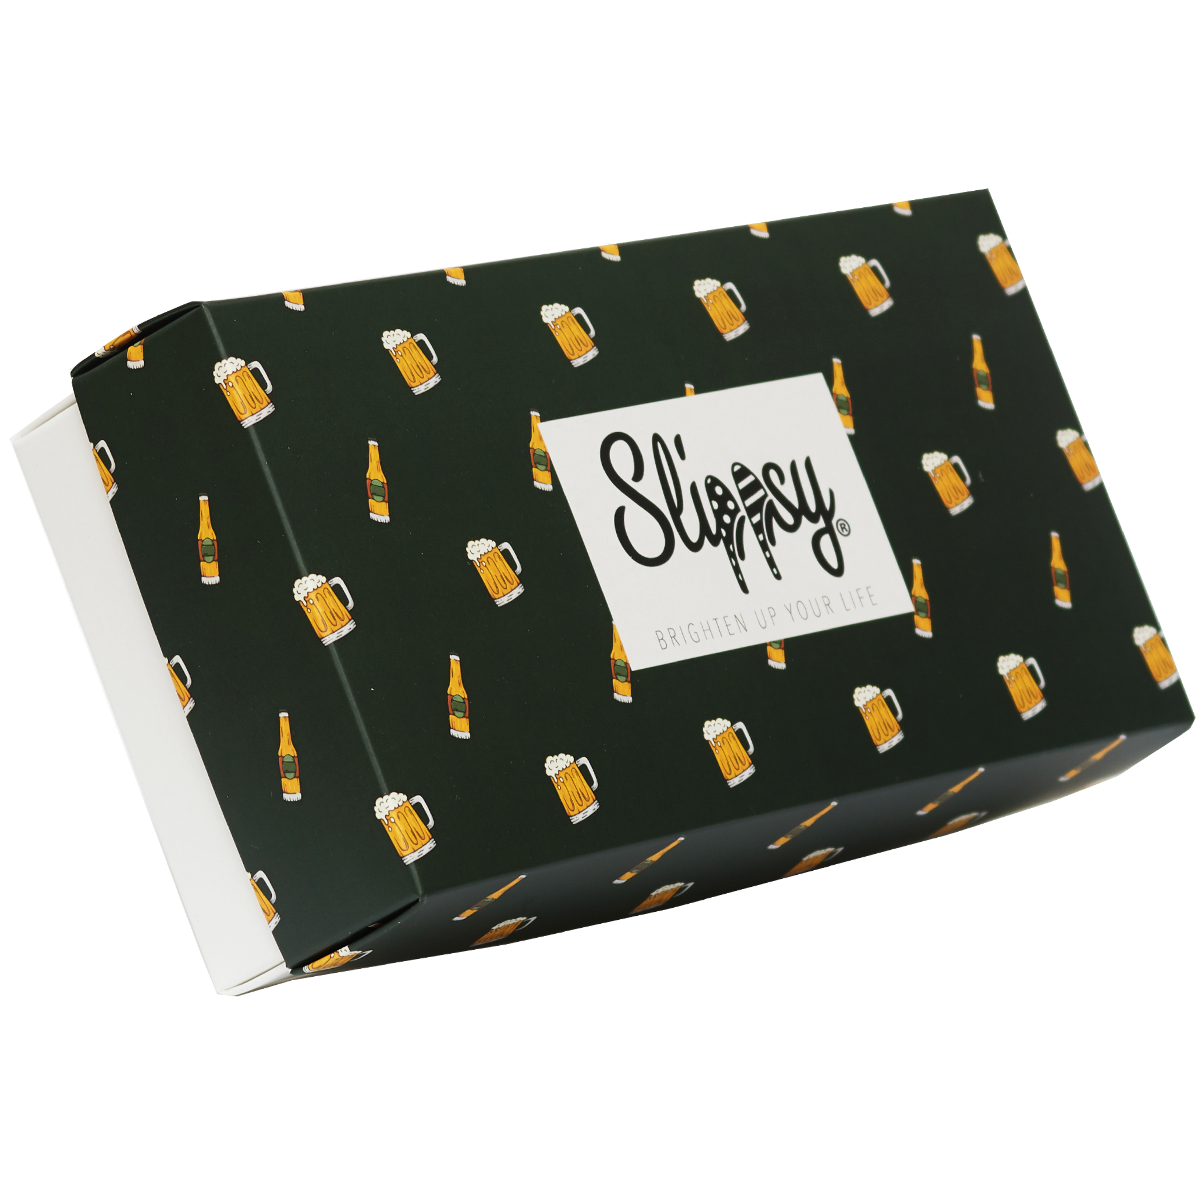 E-shop Slippsy Beer box set